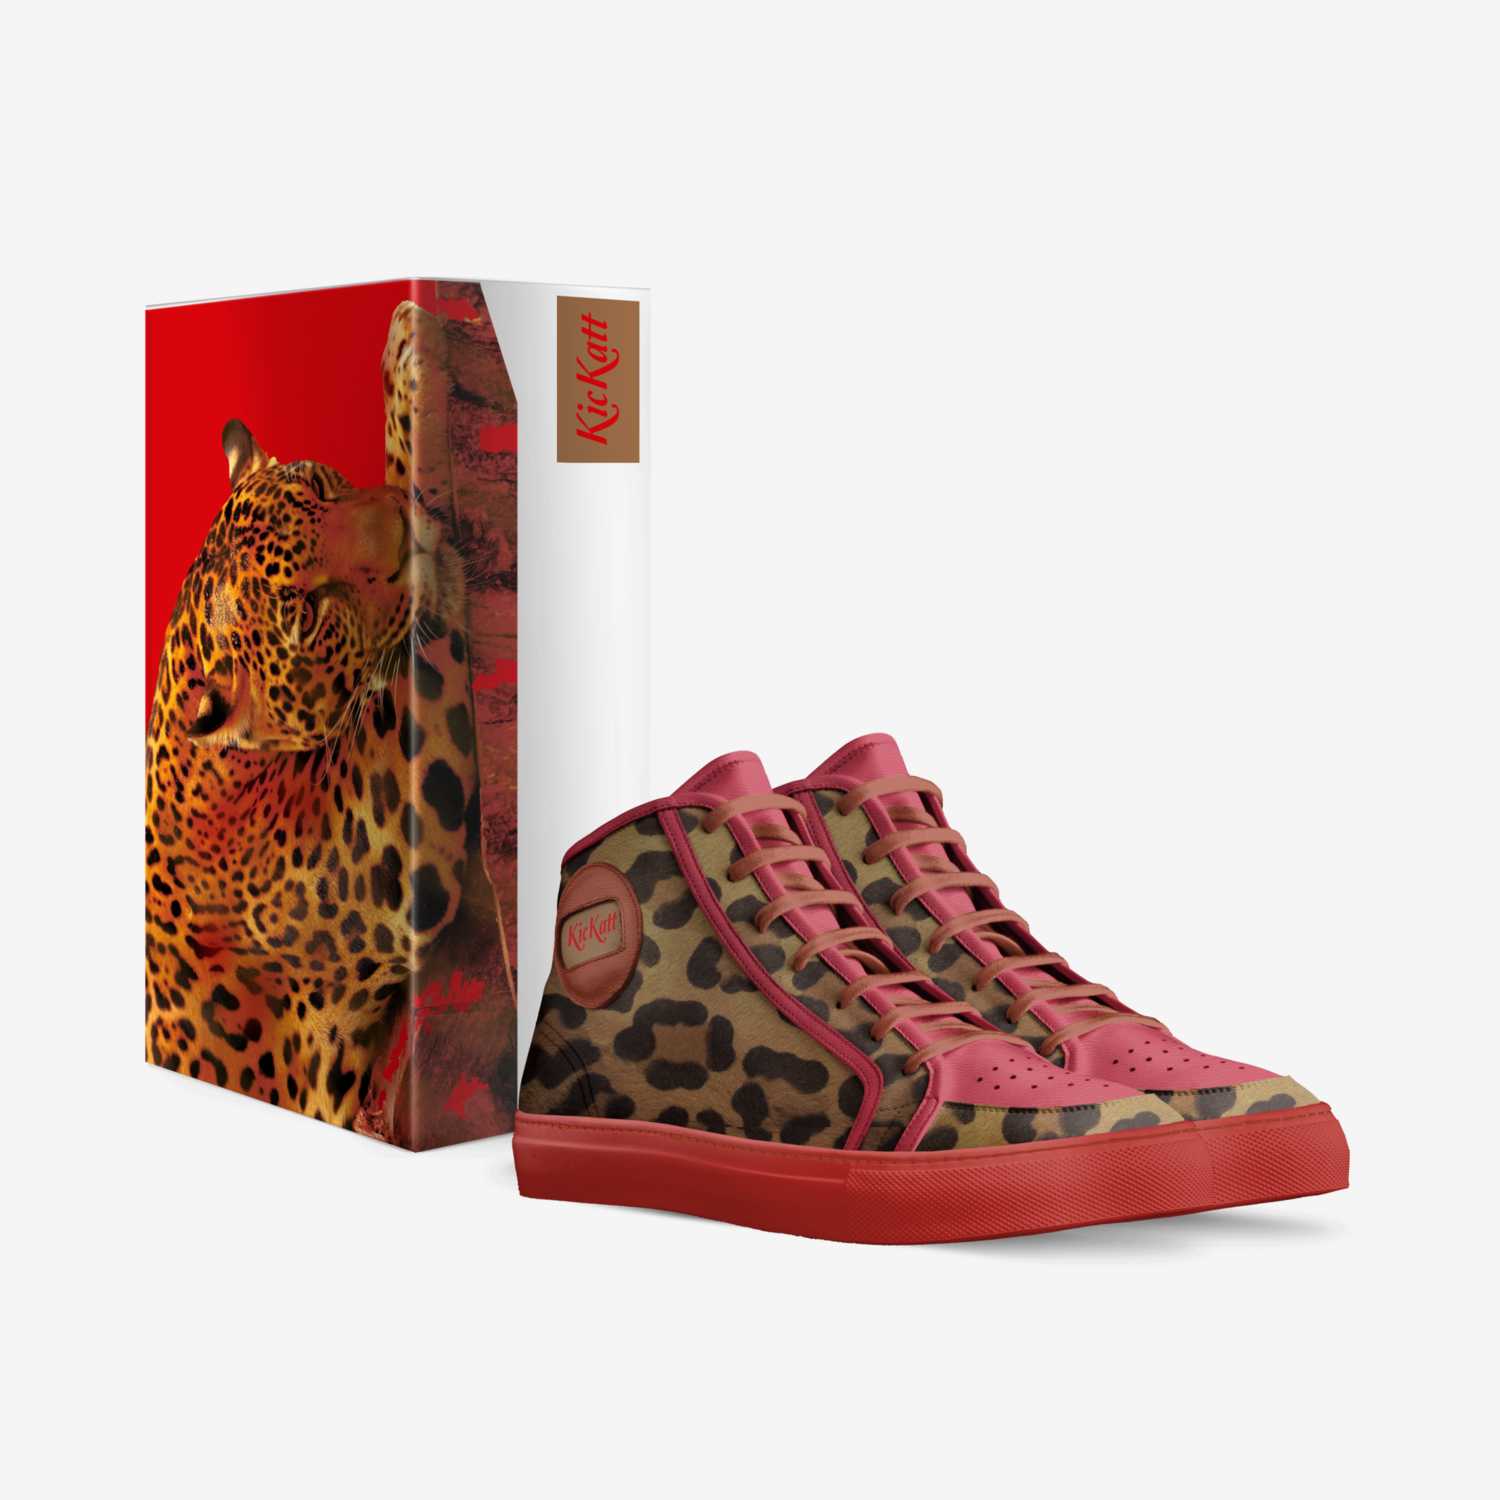 KicKatt custom made in Italy shoes by Androgynal Llc | Box view